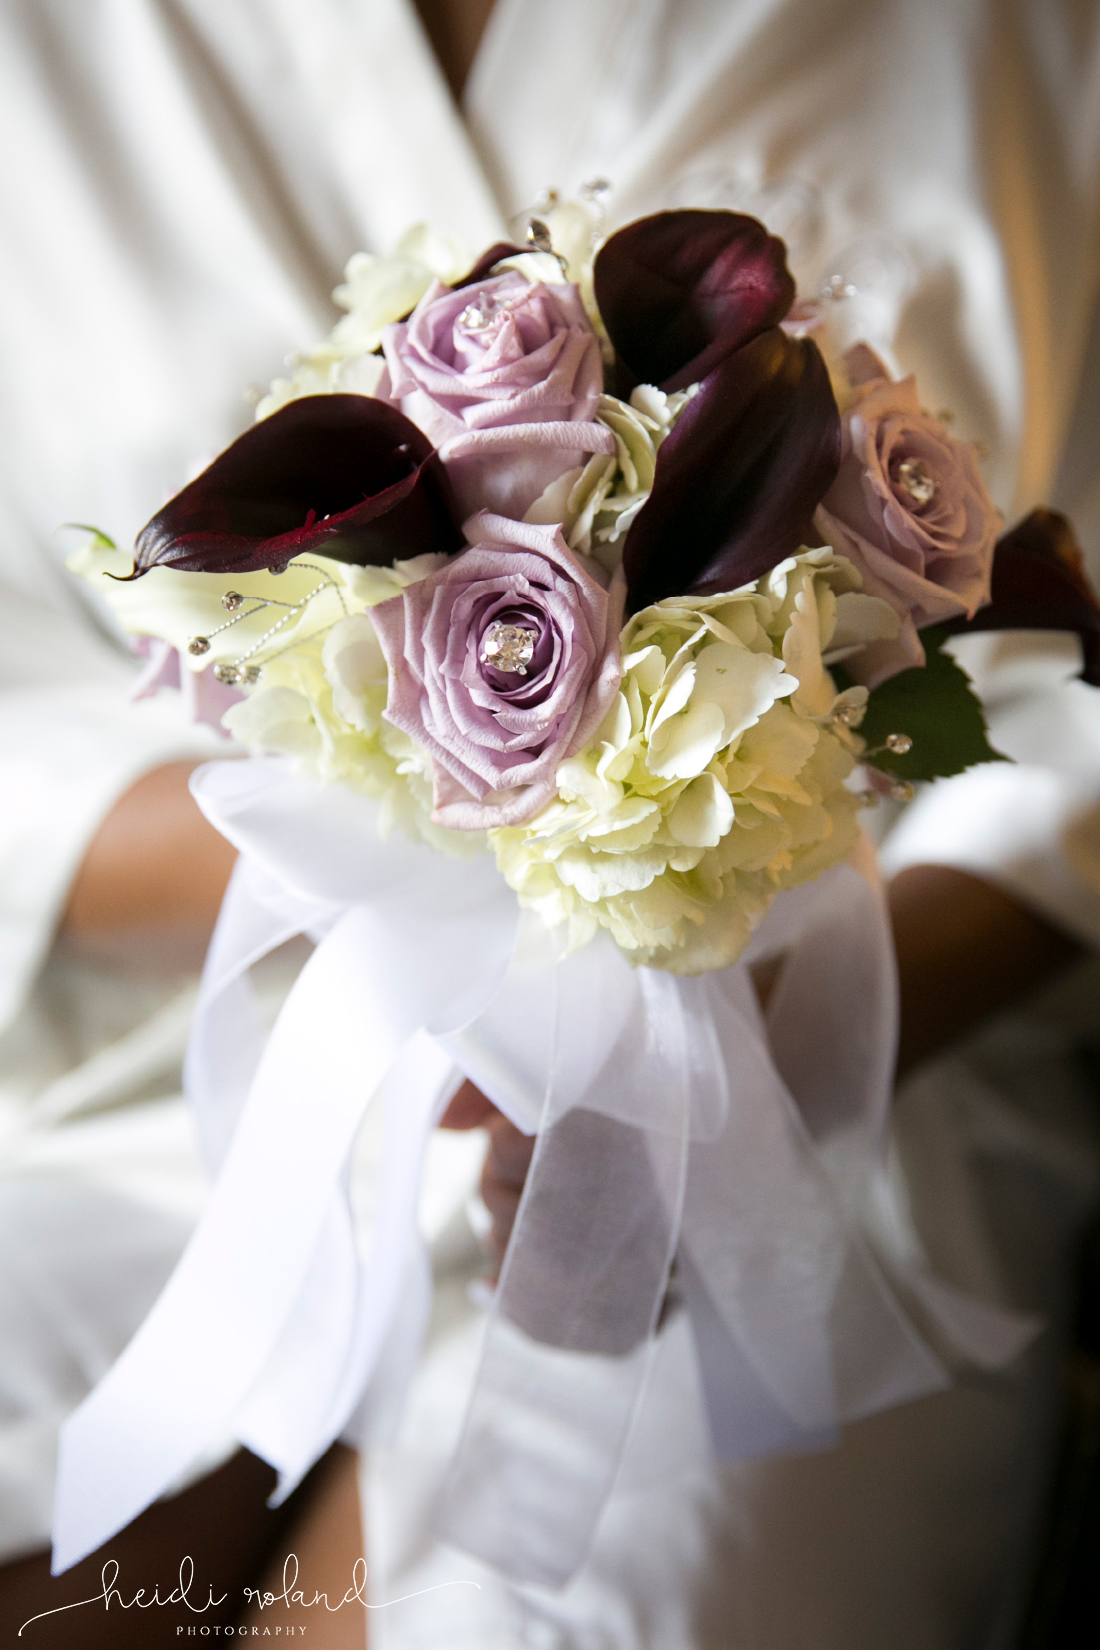 Radnor Hotel Wedding, Heidi Roland Photography, bridal bouquet, Paul Beale Flowers